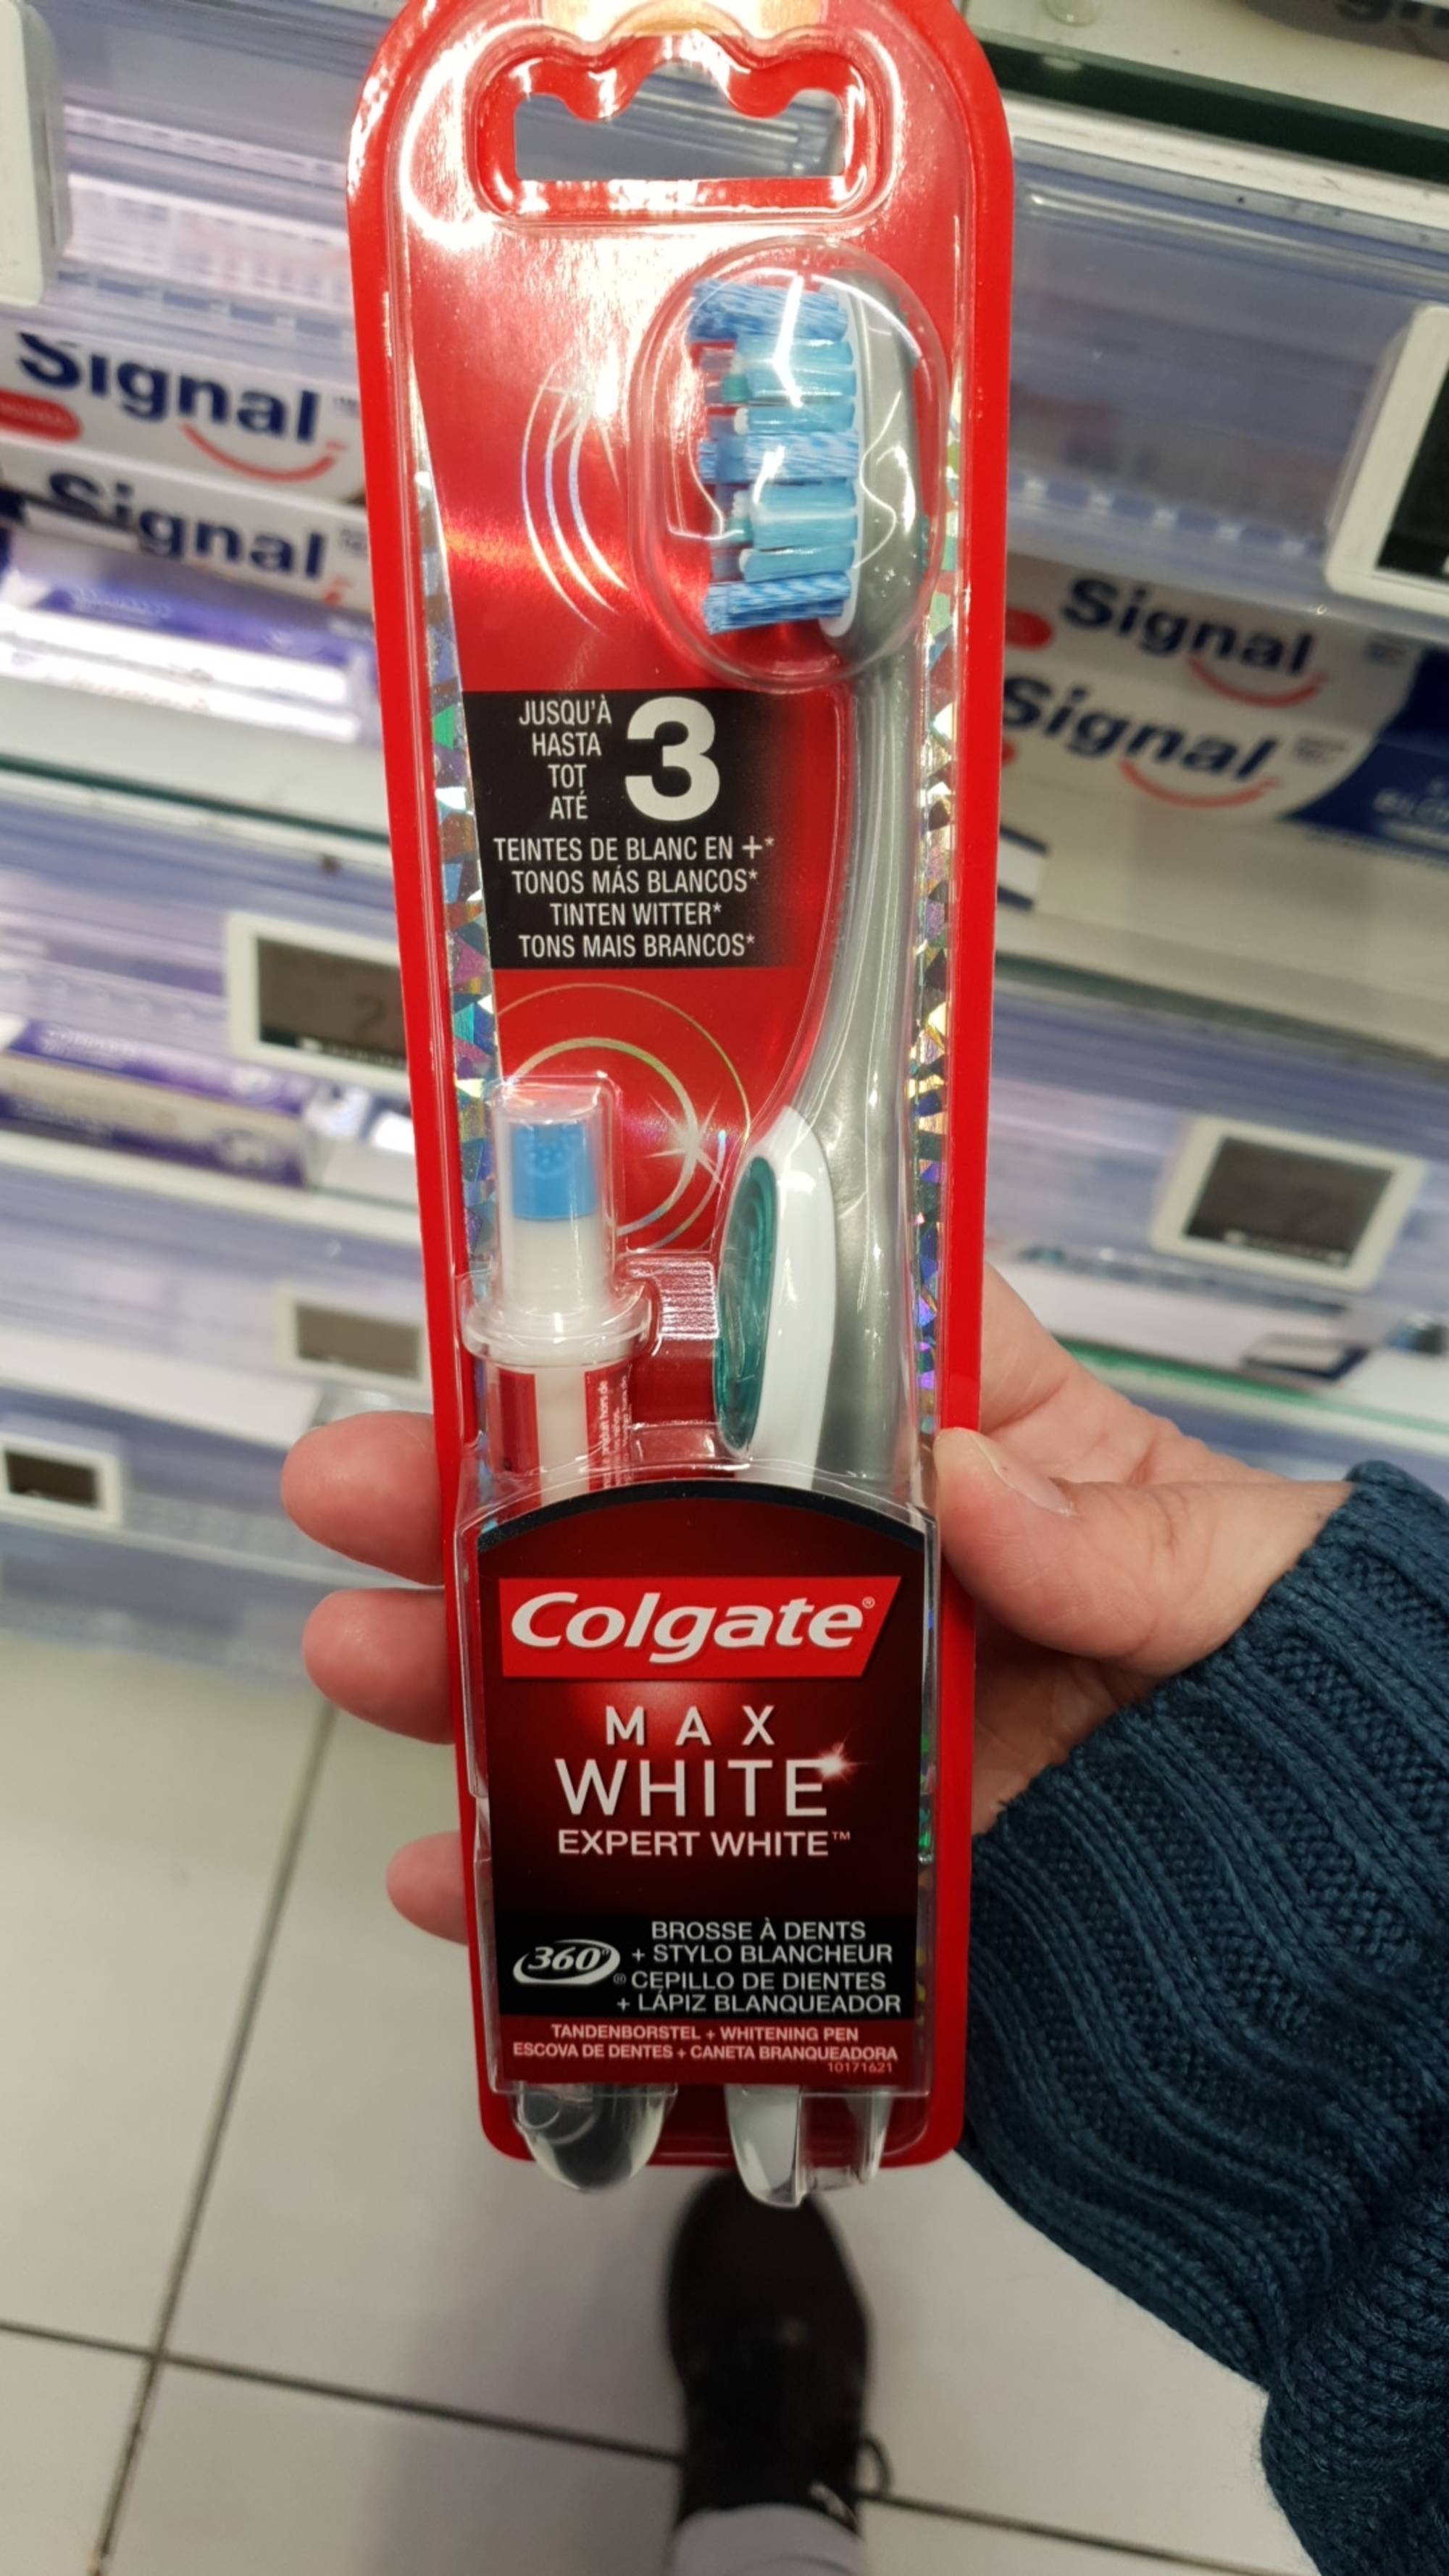 COLGATE - Max white - Brosse à dents + stylo blancheur